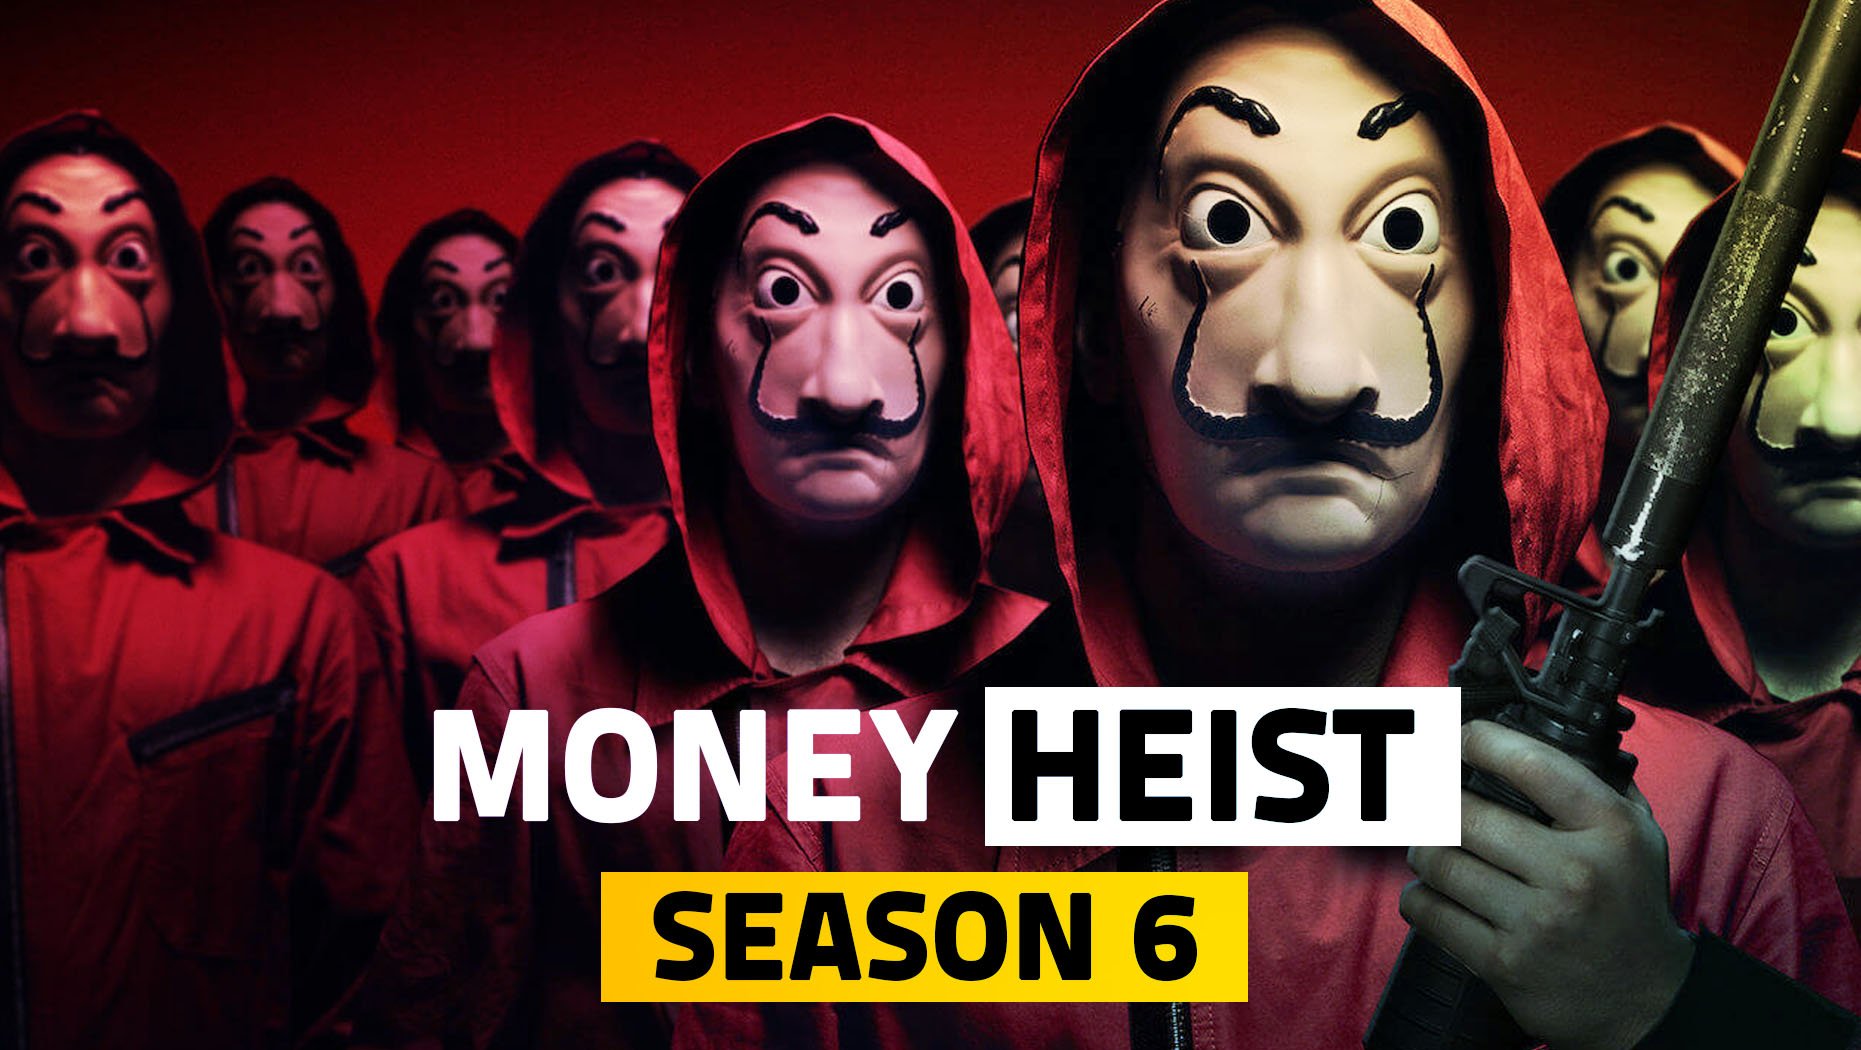 Is Money Heist Season 6 renewed or cancelled?